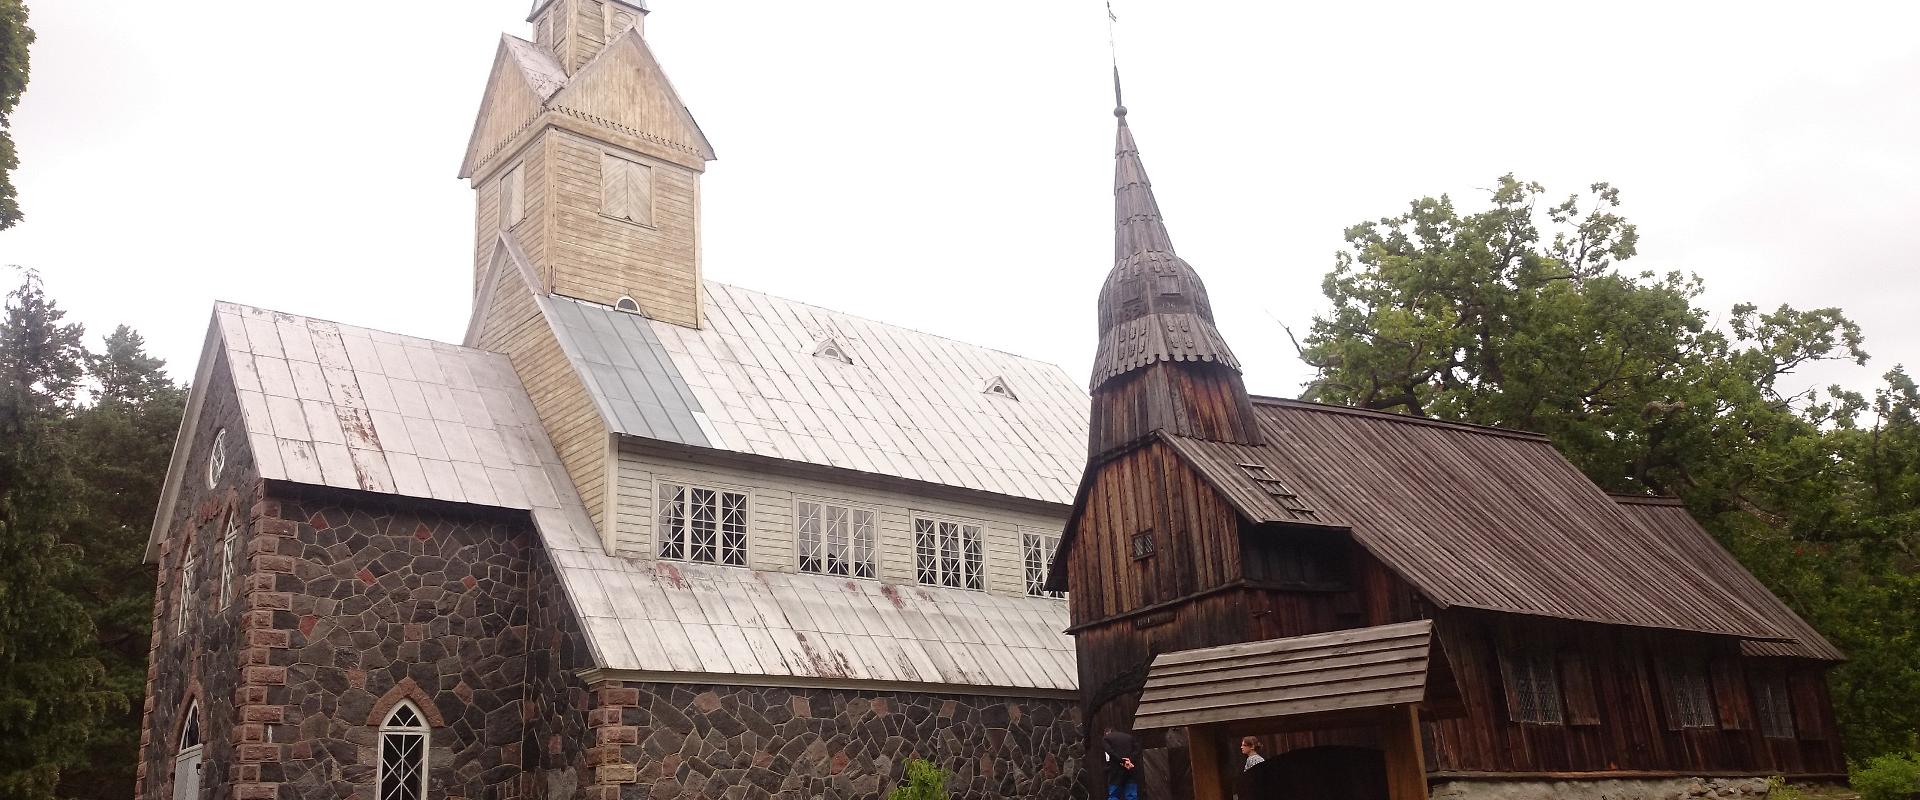 St. Magdalenen – Holzkirche auf Ruhnu (dt. Runen)